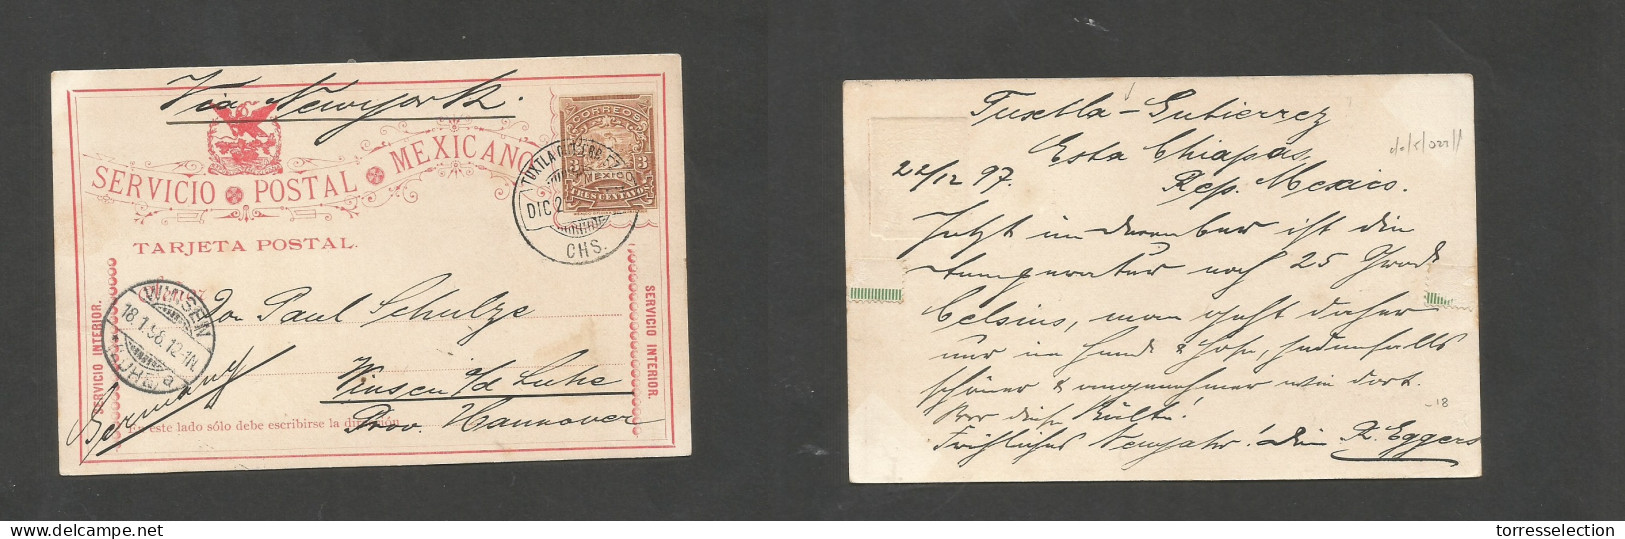 MEXICO - Stationery. 1897 (21 Dec) Tuxla Guerrero - Germany, Winsen (18 Jan 98) 3c Brown Militar Issue Stat Card. SPM. F - Mexiko